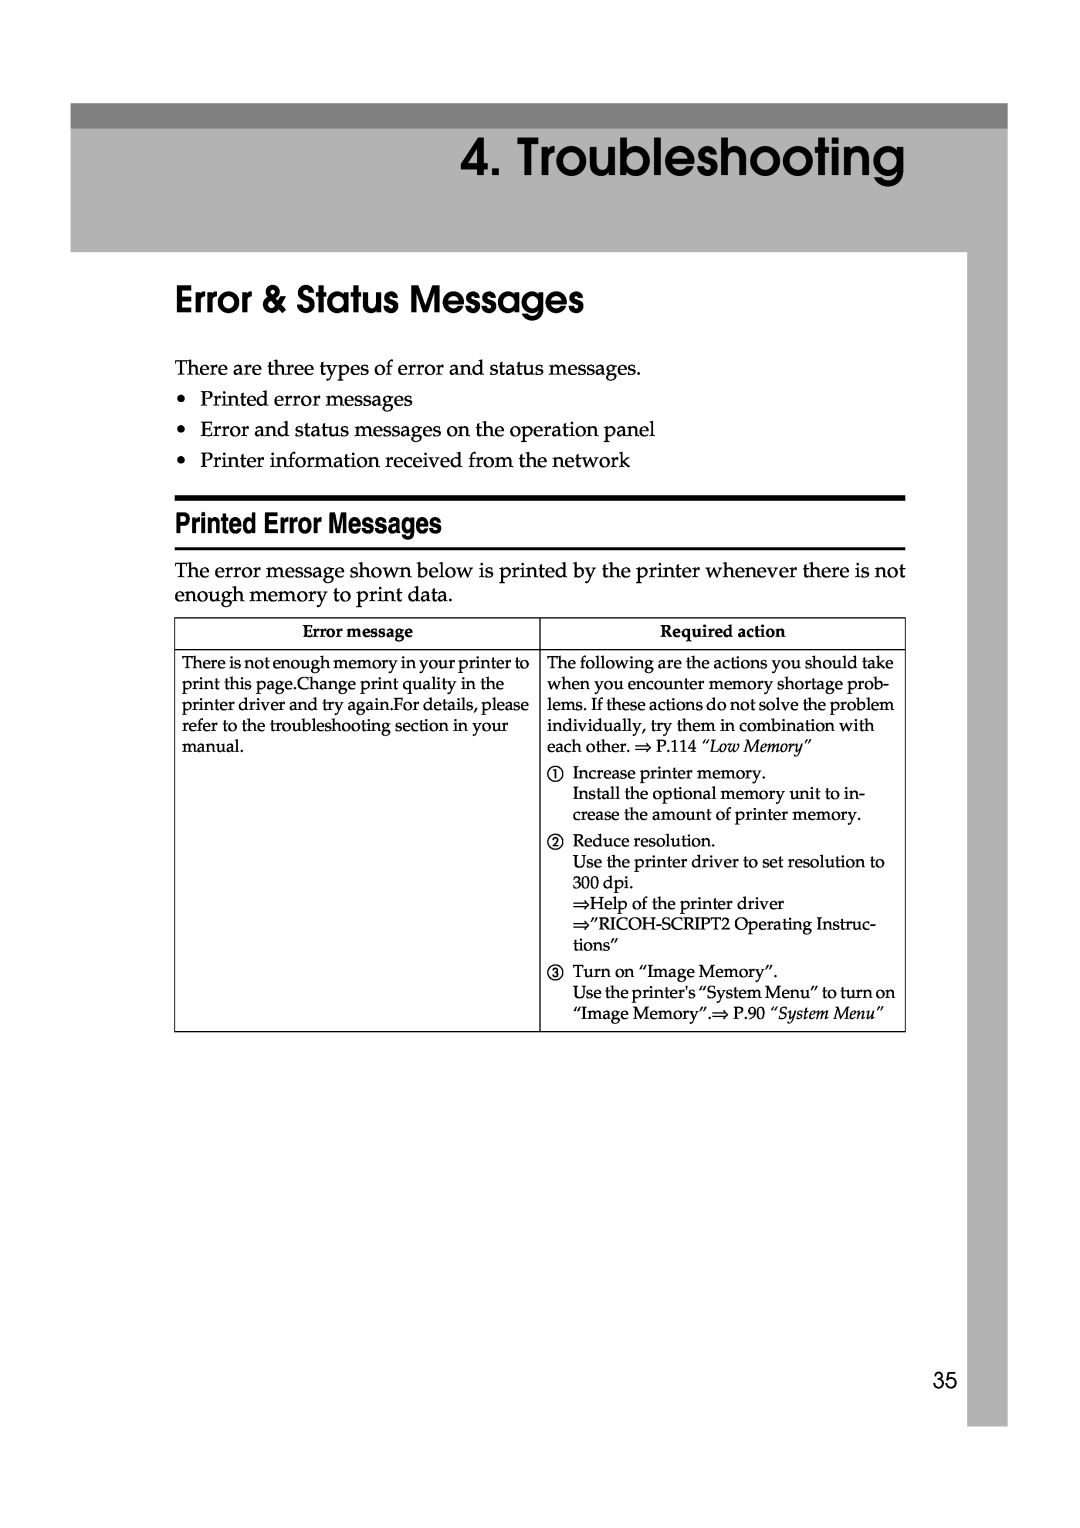 Lanier AP206 manual Troubleshooting, Error & Status Messages, Printed Error Messages, Error message, Required action 